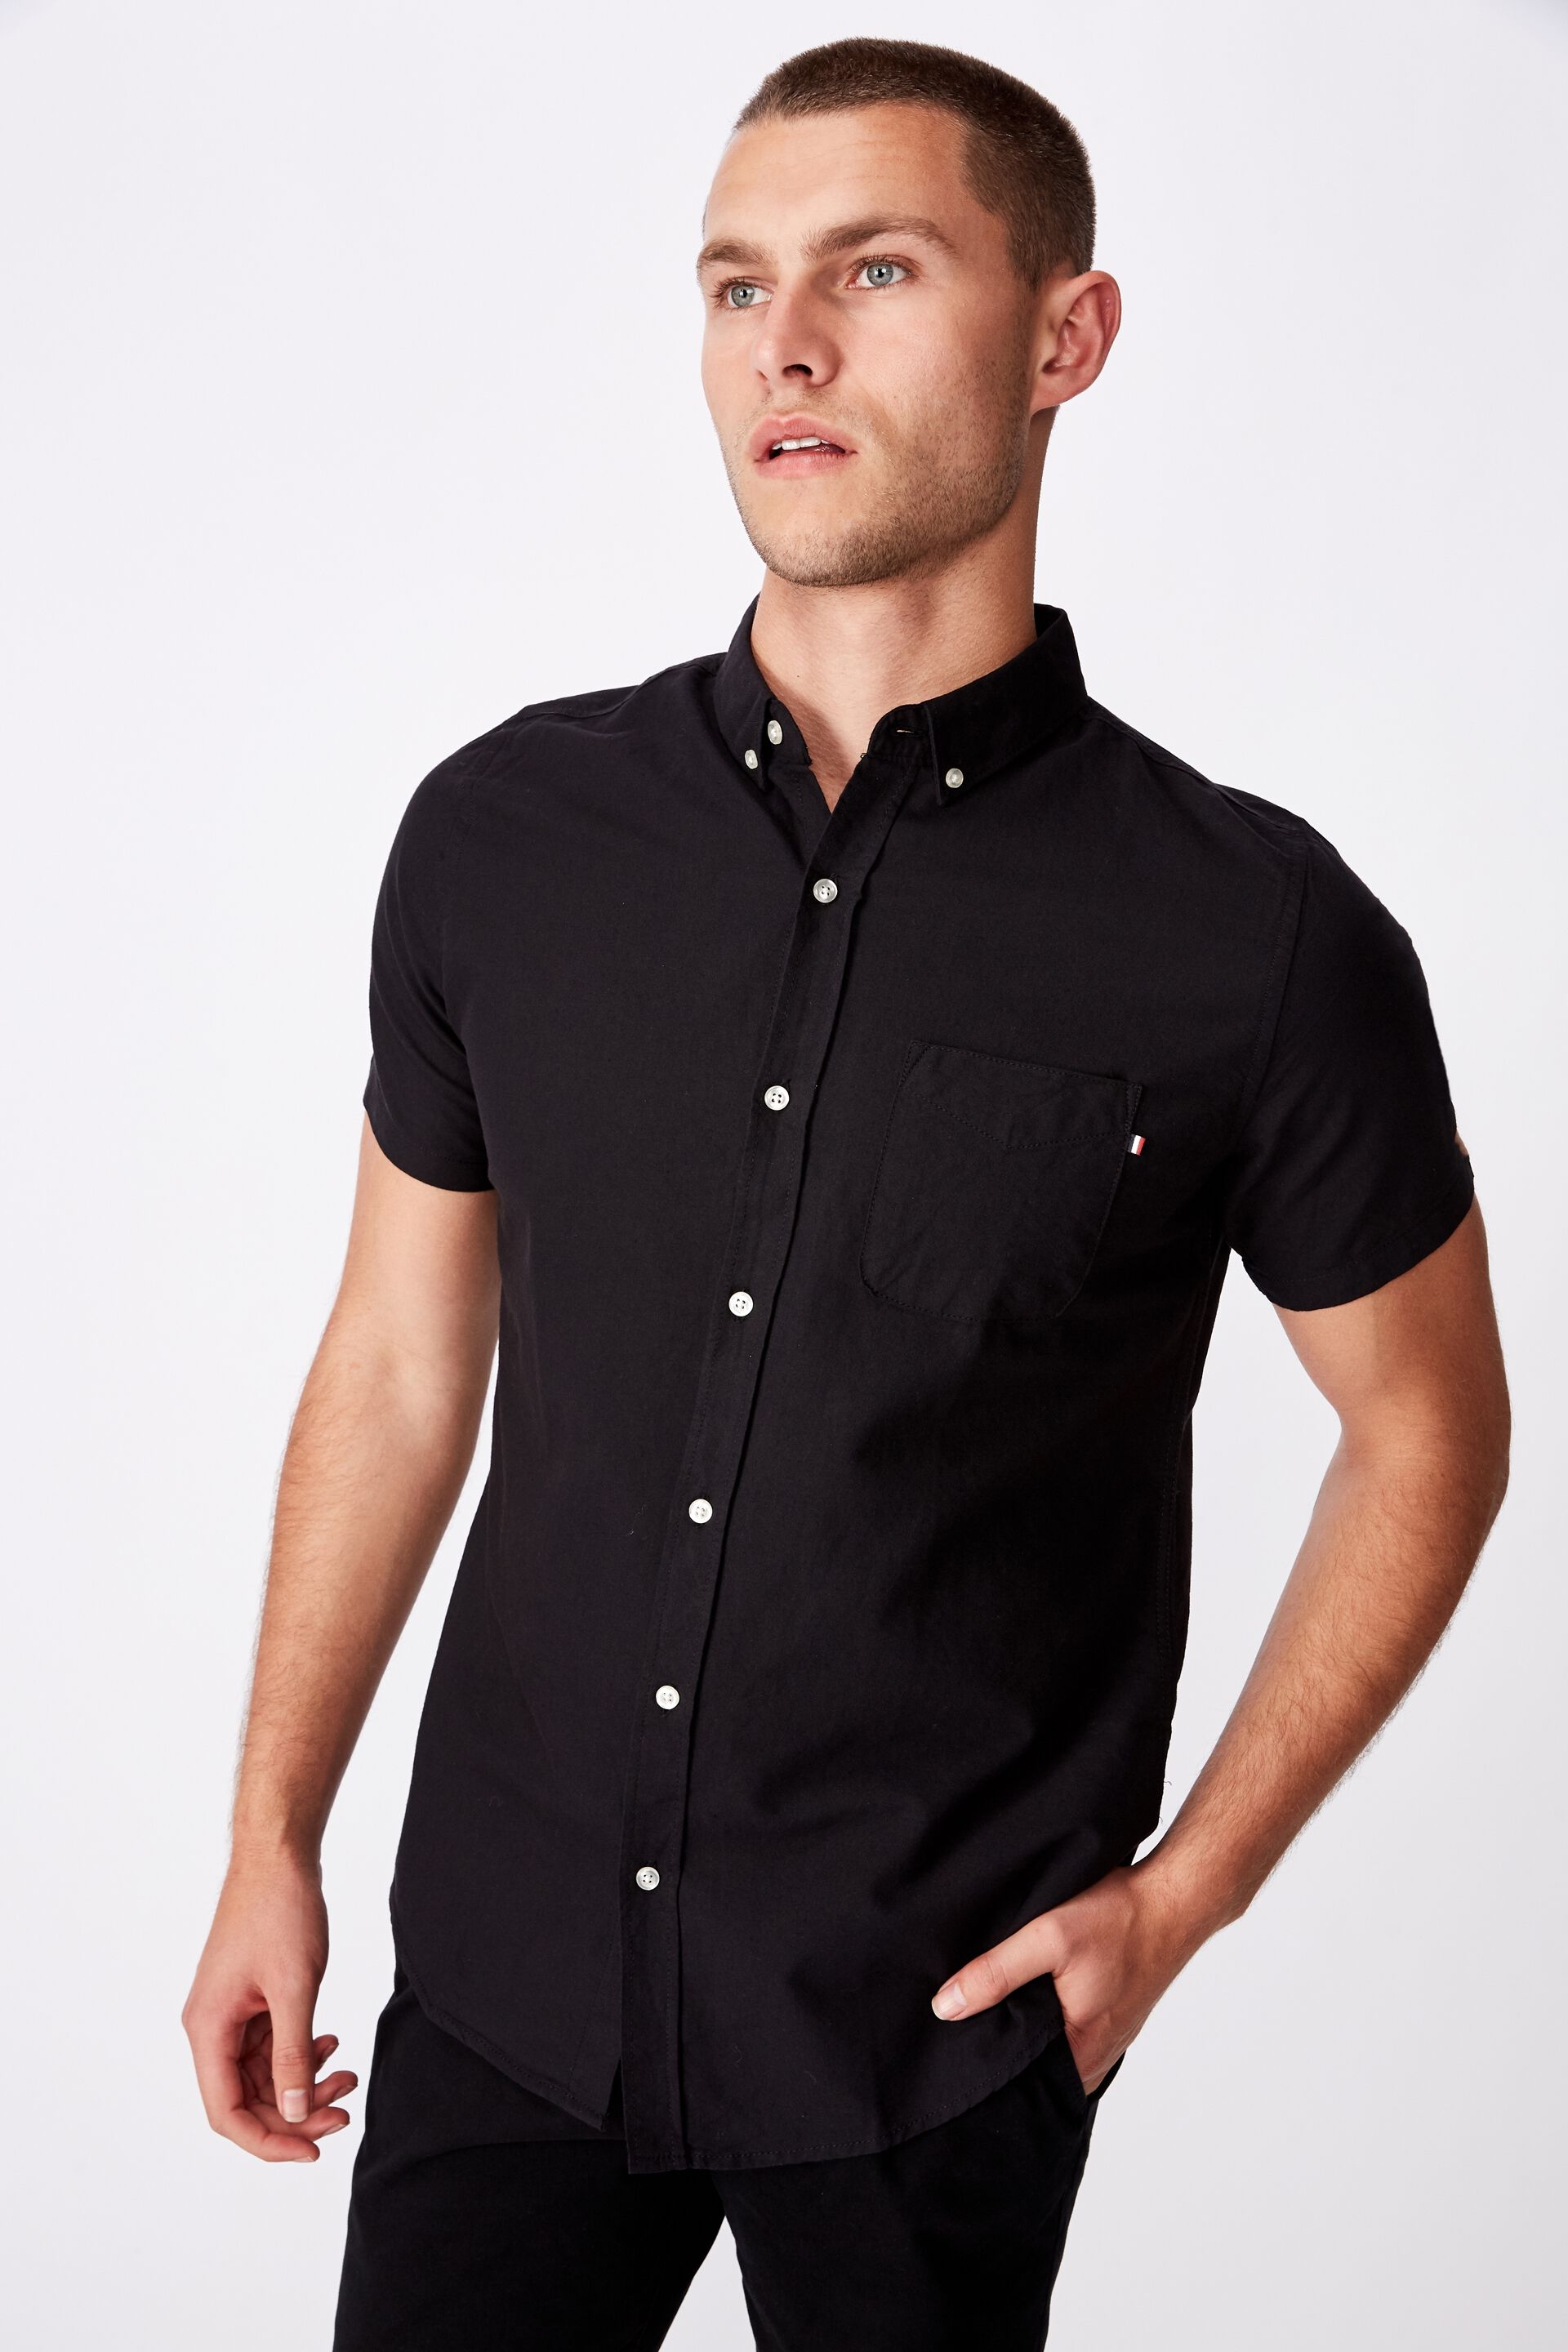 Buy > black short sleeve dress shirt mens > in stock